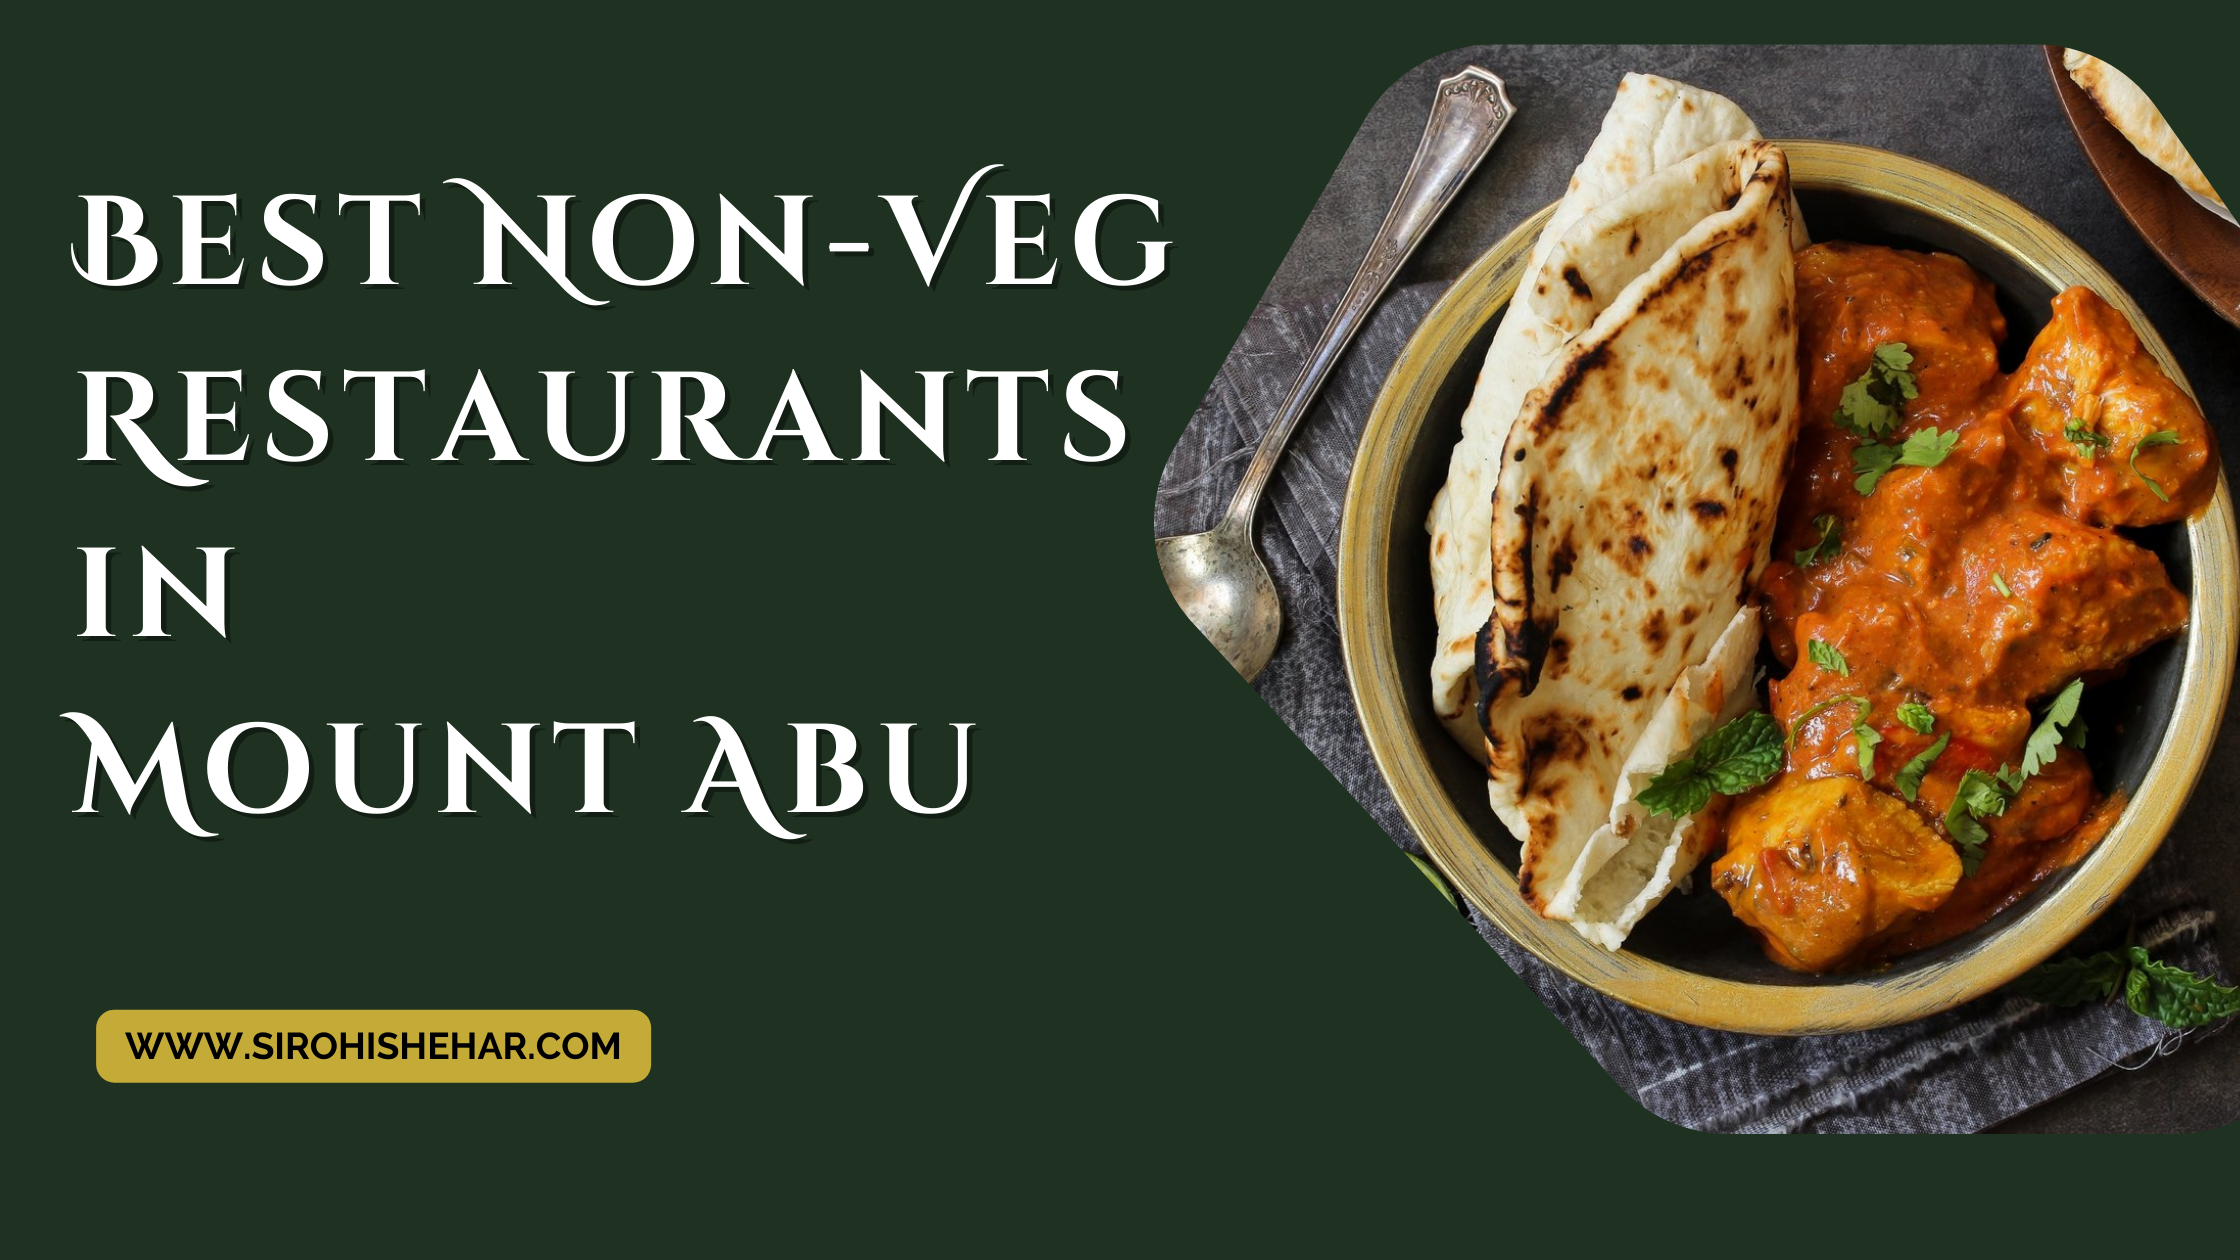 Best Non-Veg Restaurants in Mount Abu